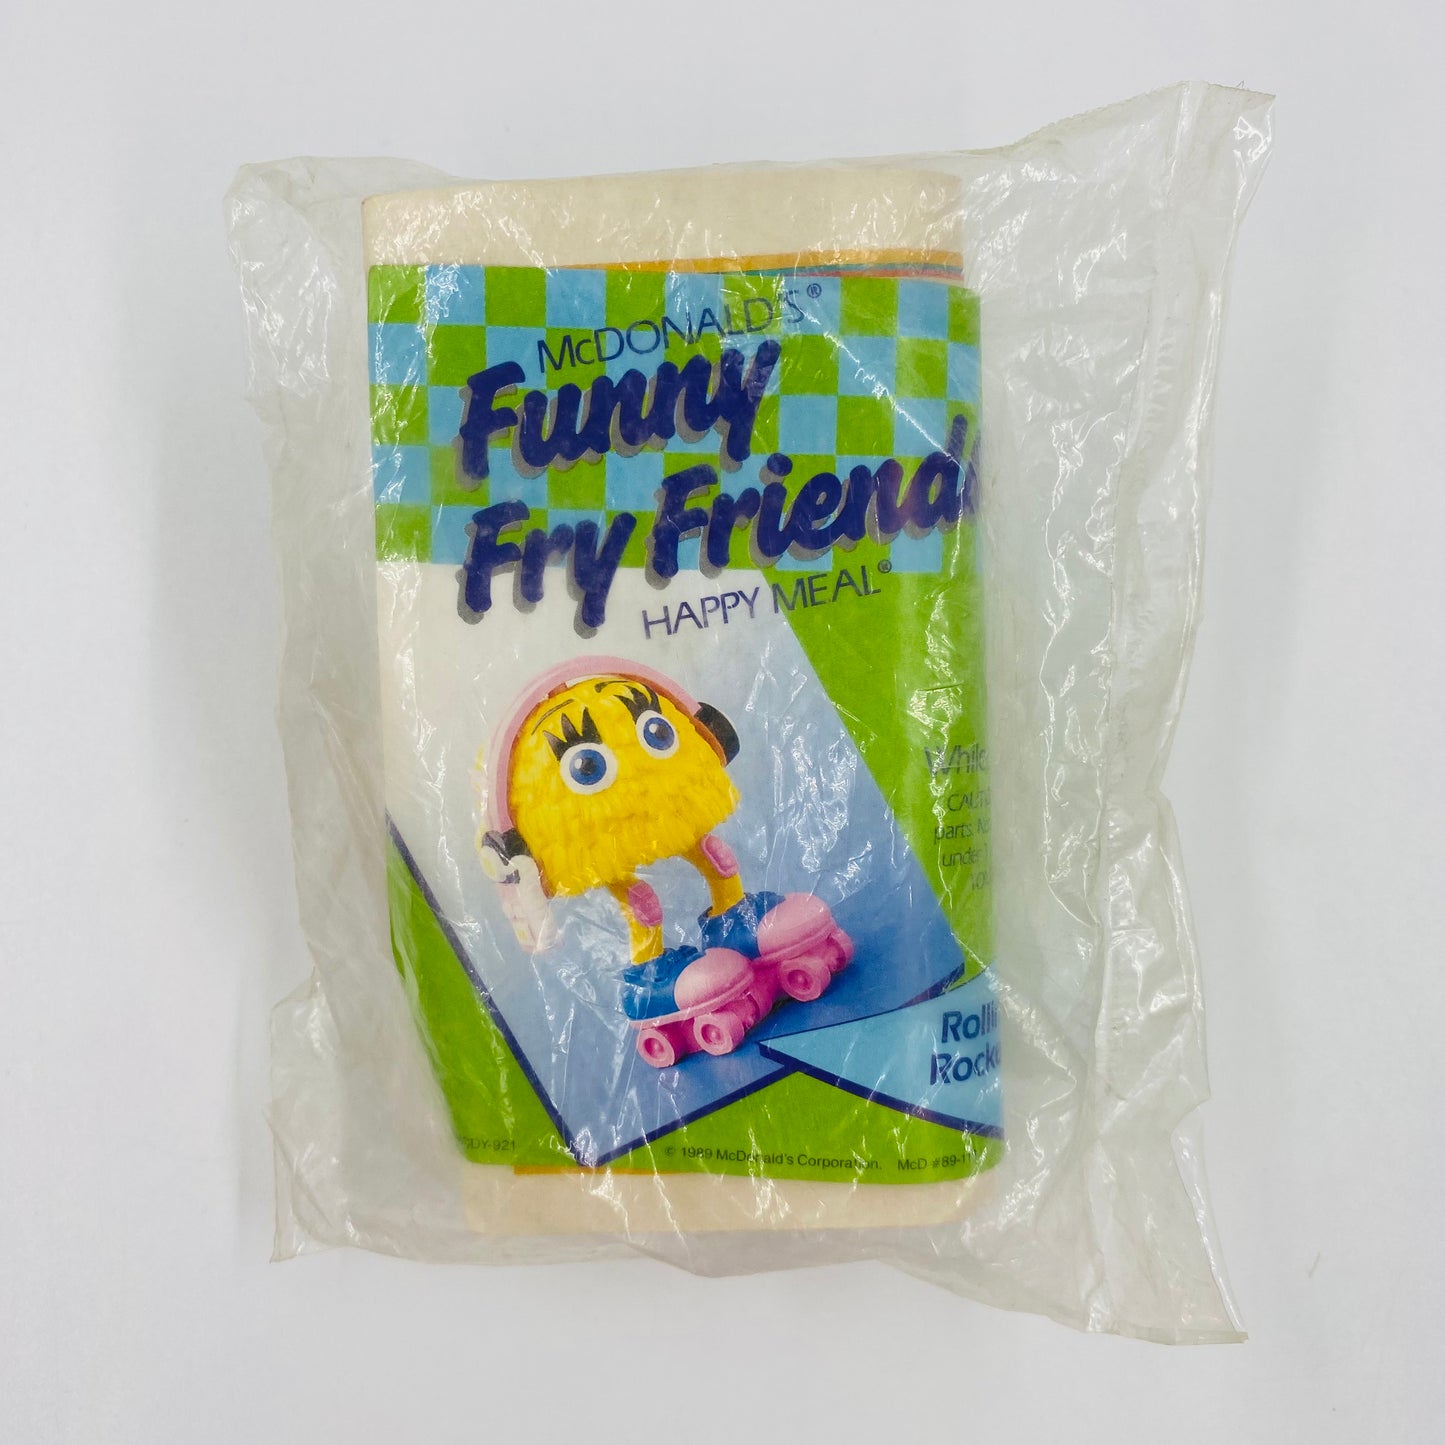 McDonald's Funny Fry Friends Rollin' Rocker McDonald's Happy Meal toy (1989) bagged